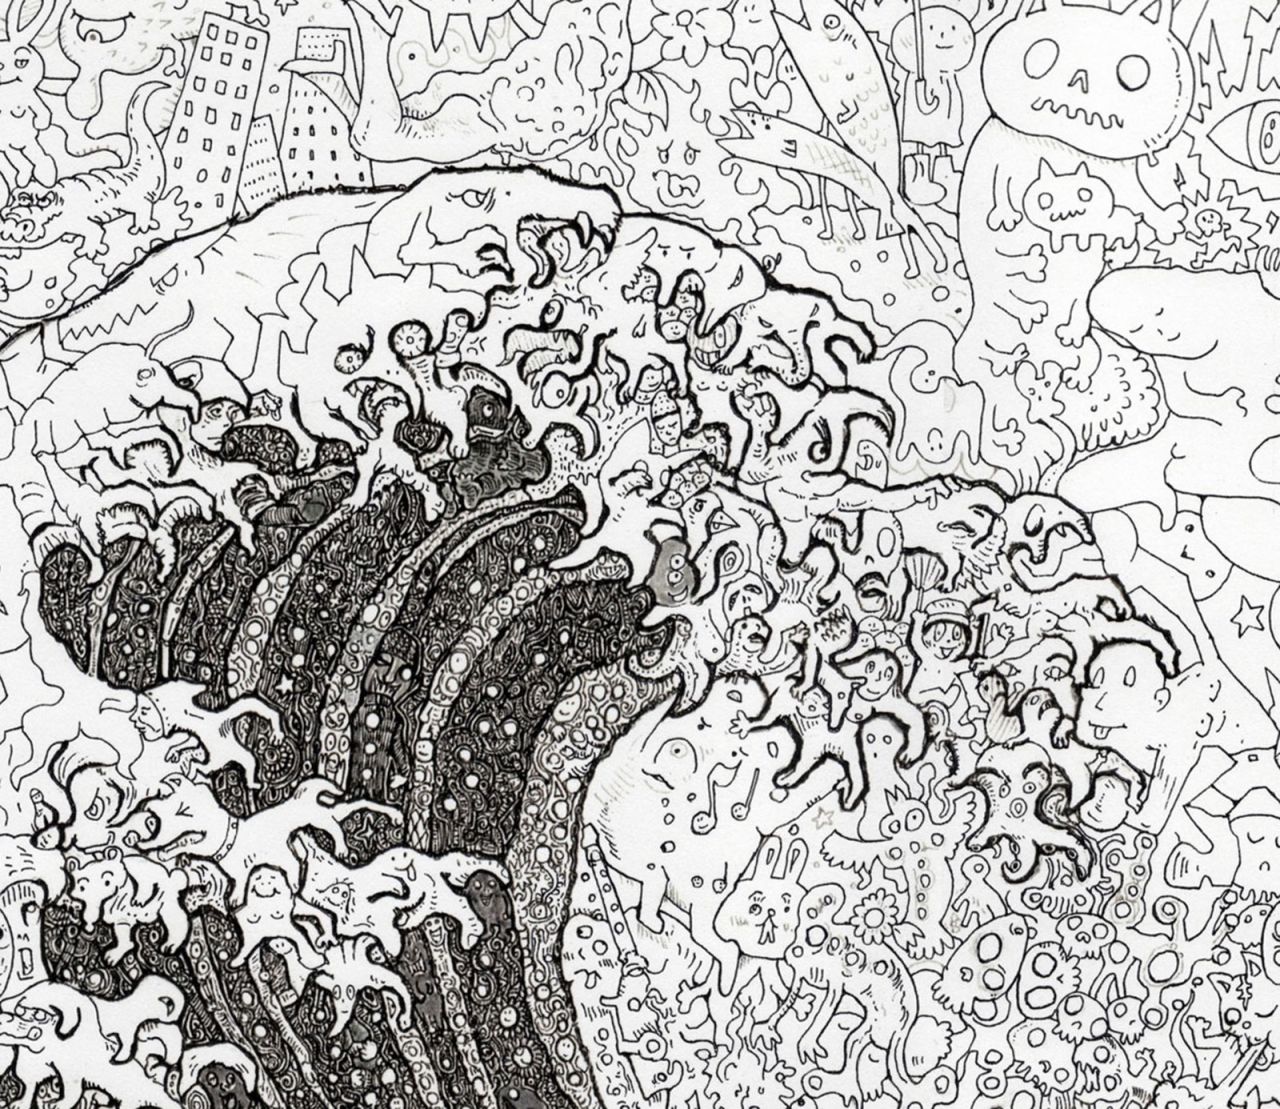 Detail shot shows Sagaki's version of "The Great Wave off Kanagawa."